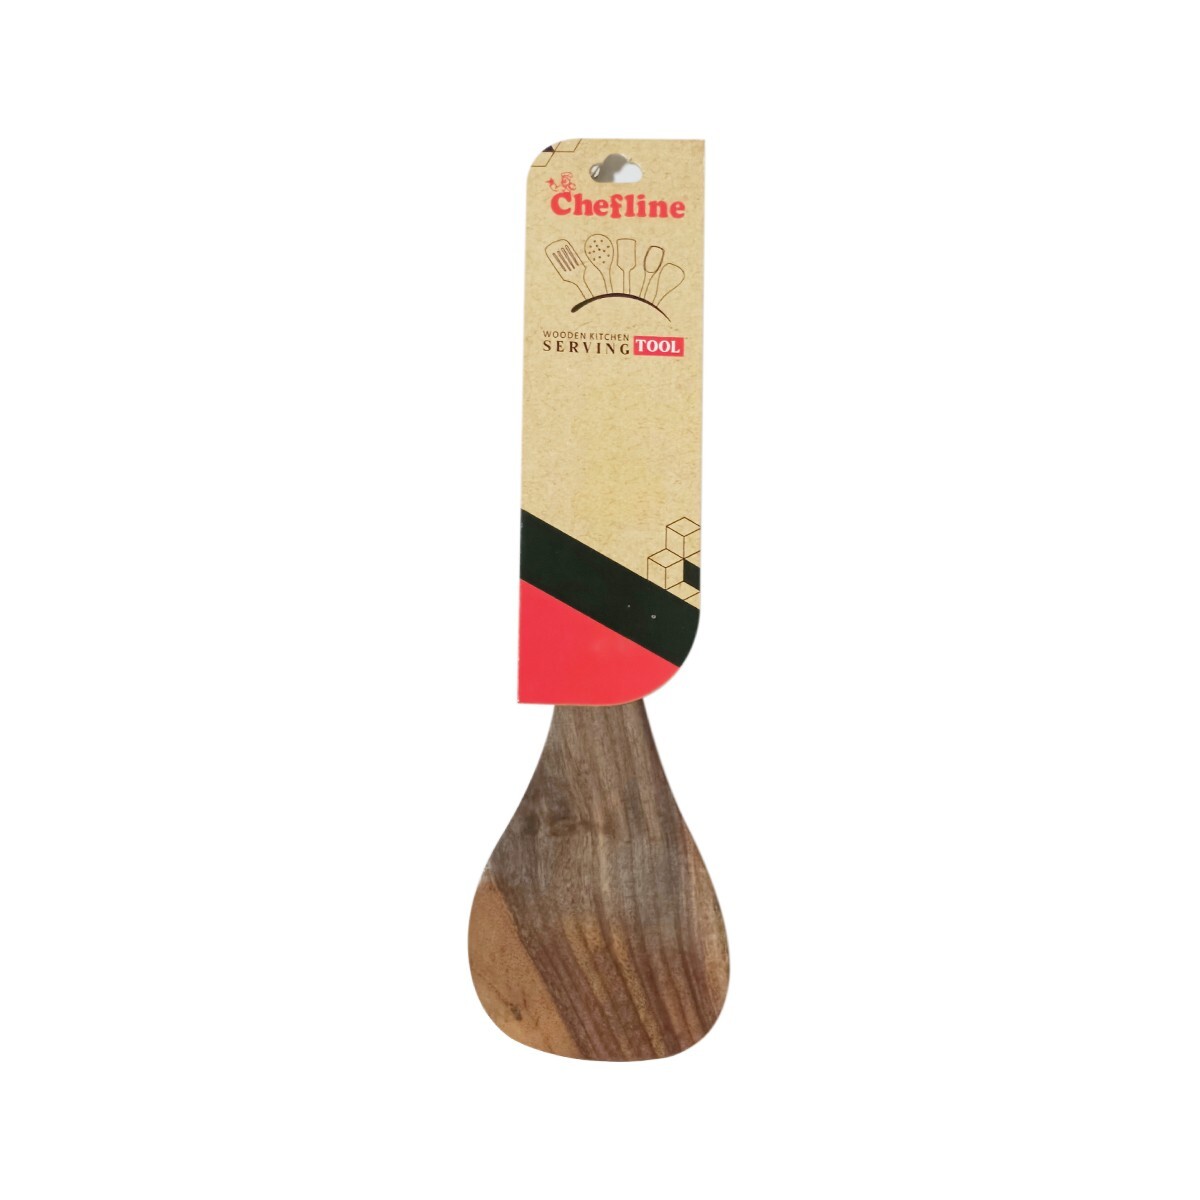 Chefline Wooden Rice Spoon